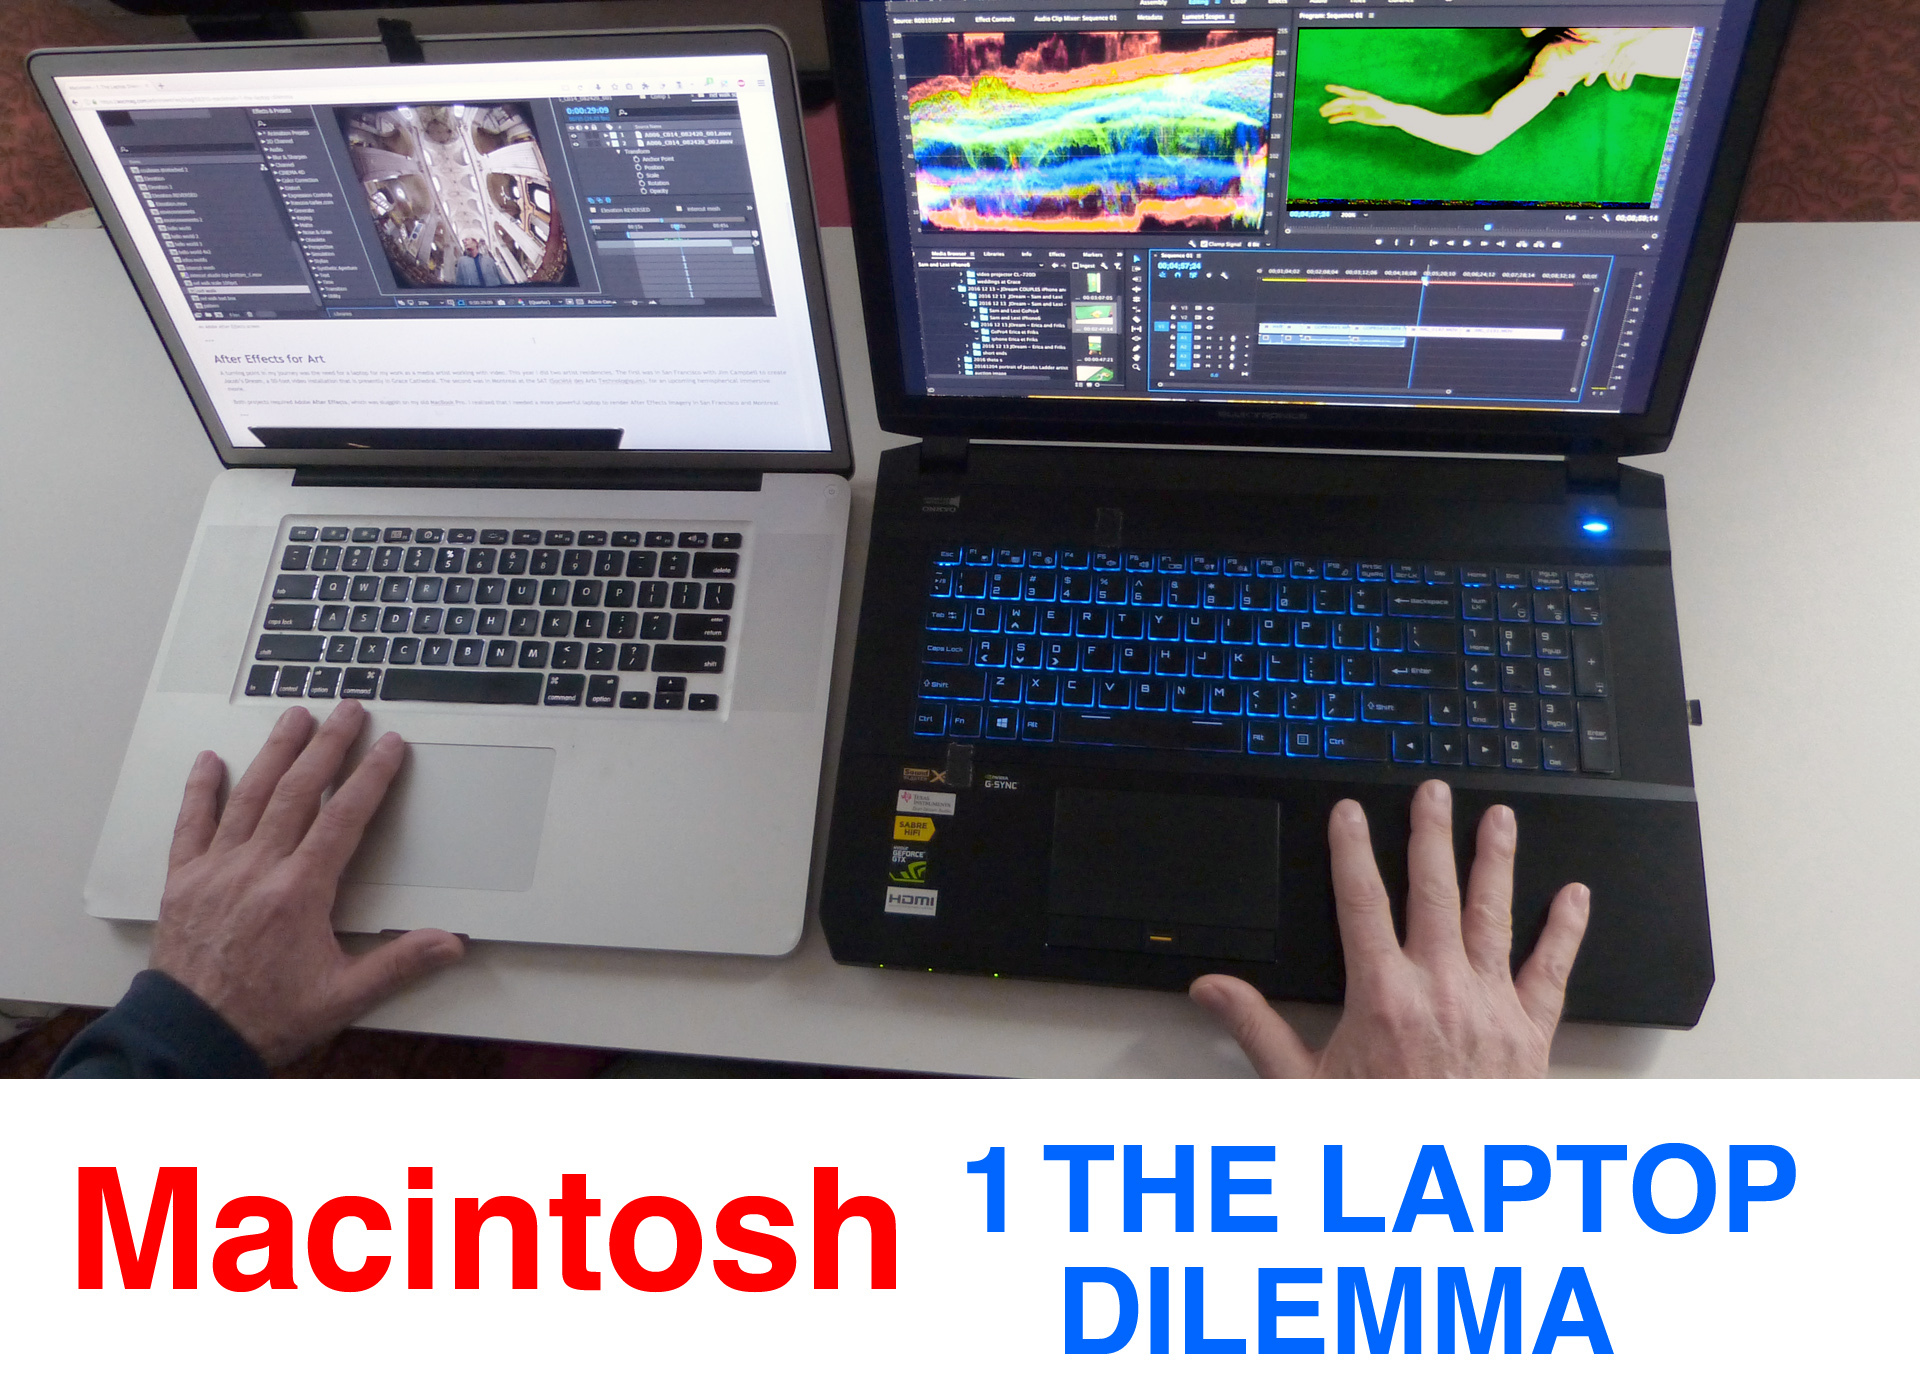 Mac Intosh 1 The Laptop Dilemma Thefilmbook